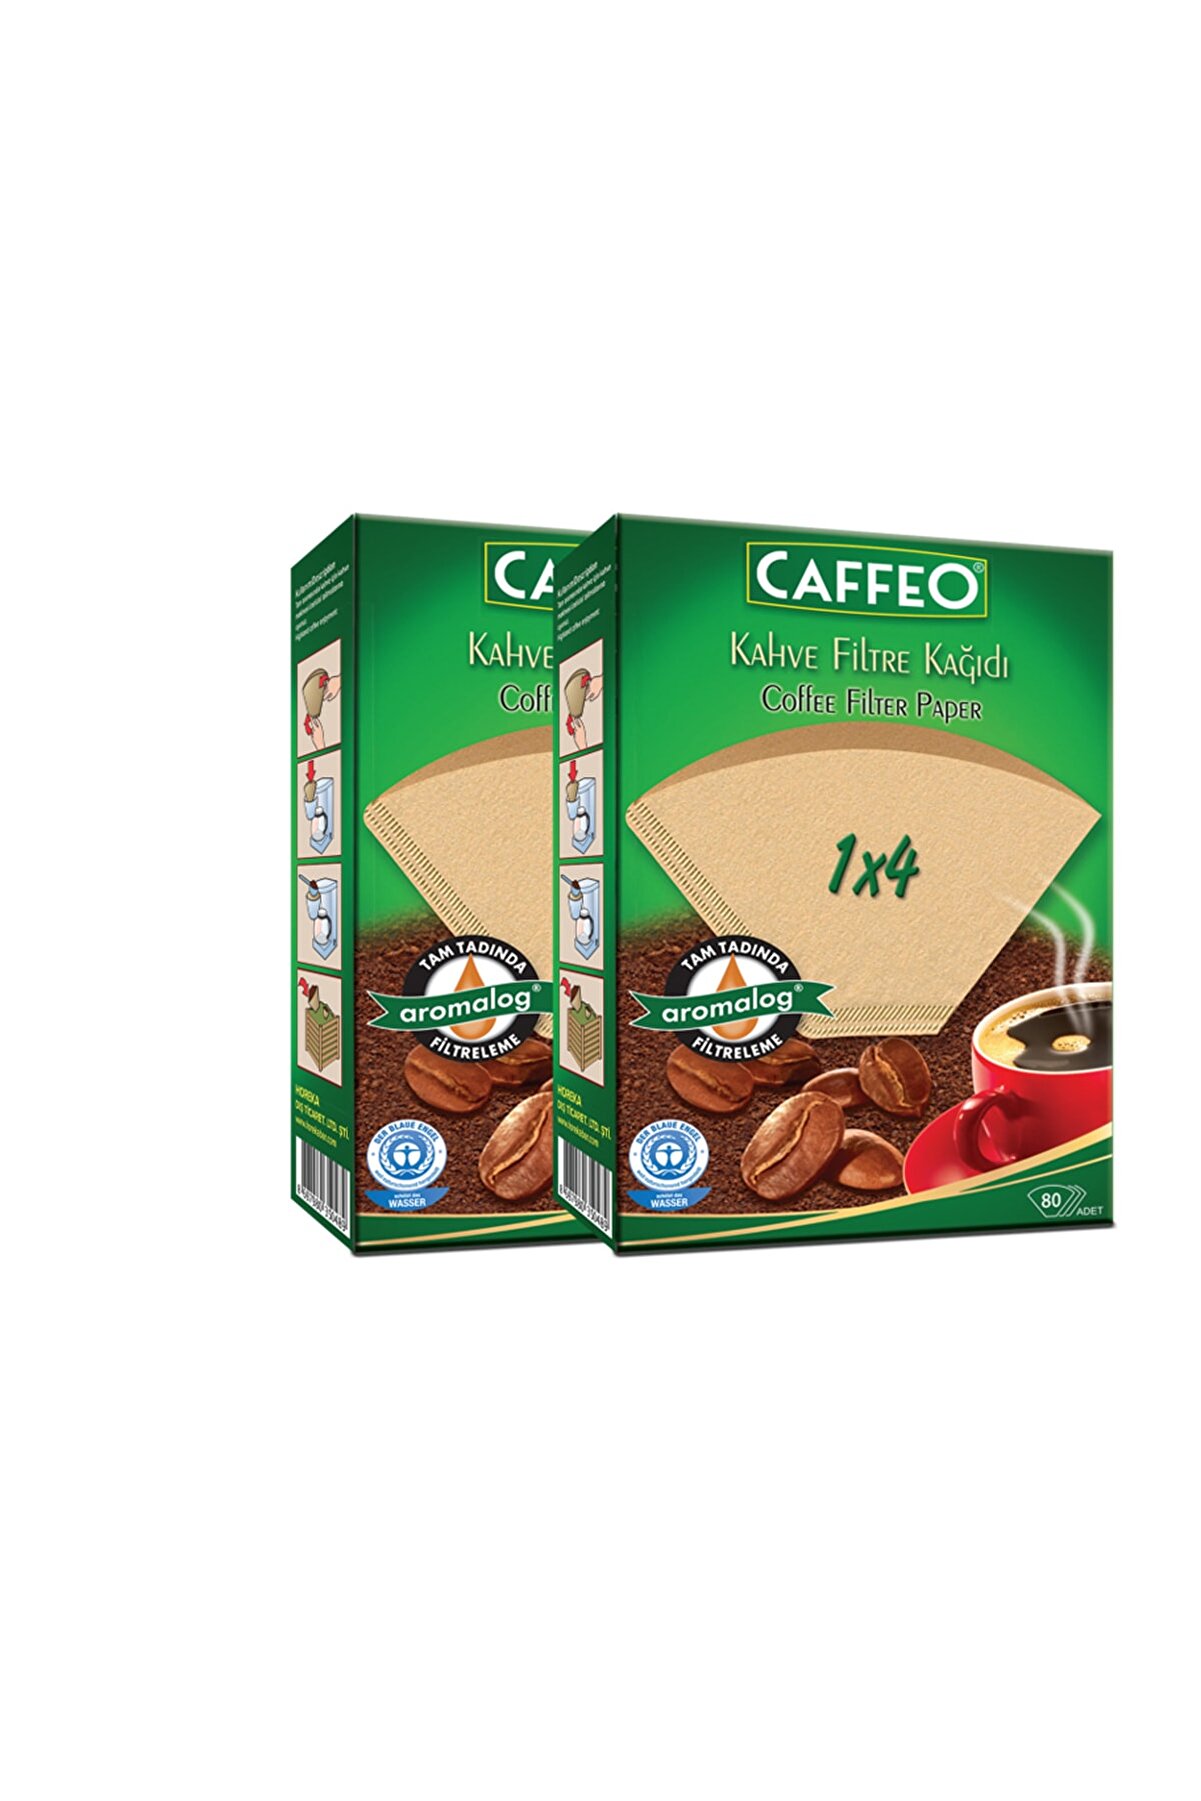 Caffeo Kahve Filtresi 1x4 80li 2 Paket